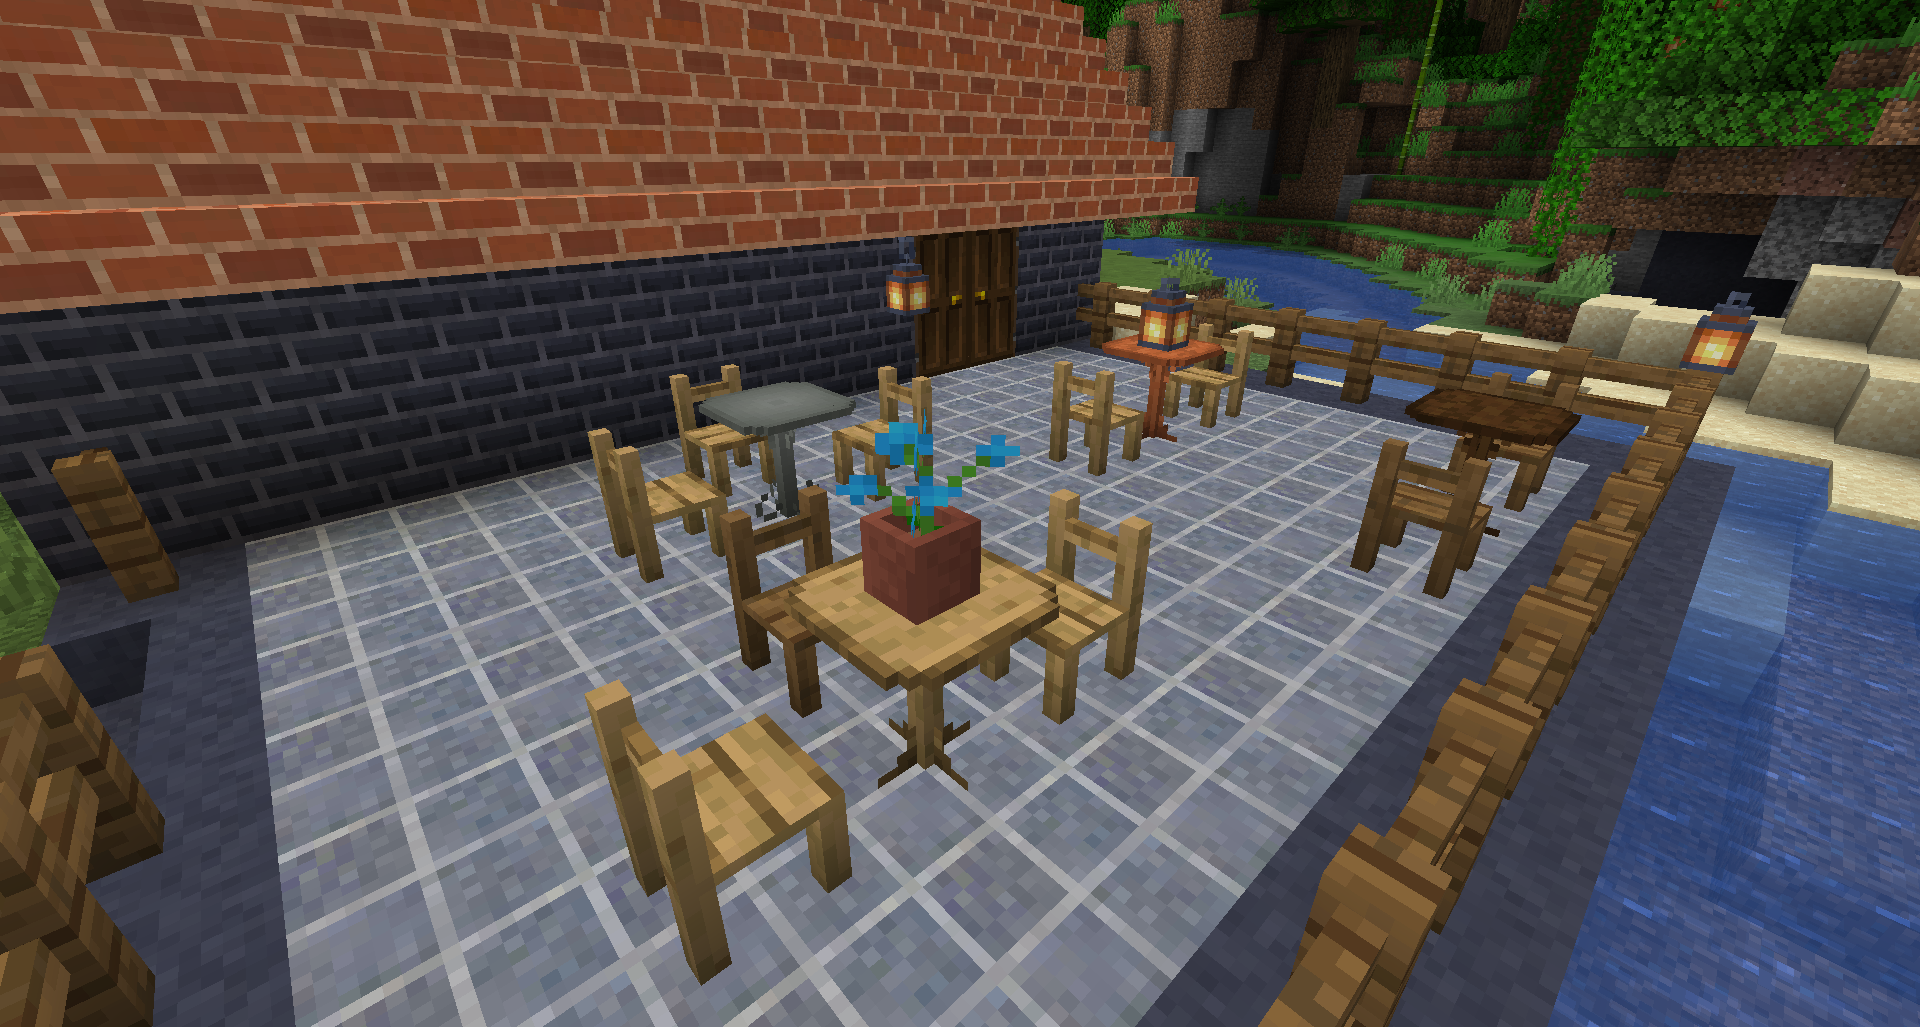 Minecraft 16 5. Мебель для МАЙНКРАФТА 1.16.5. Minecraft 1.14.4. Мод на мебель 1.16.5. Decocraft 1.16.5.